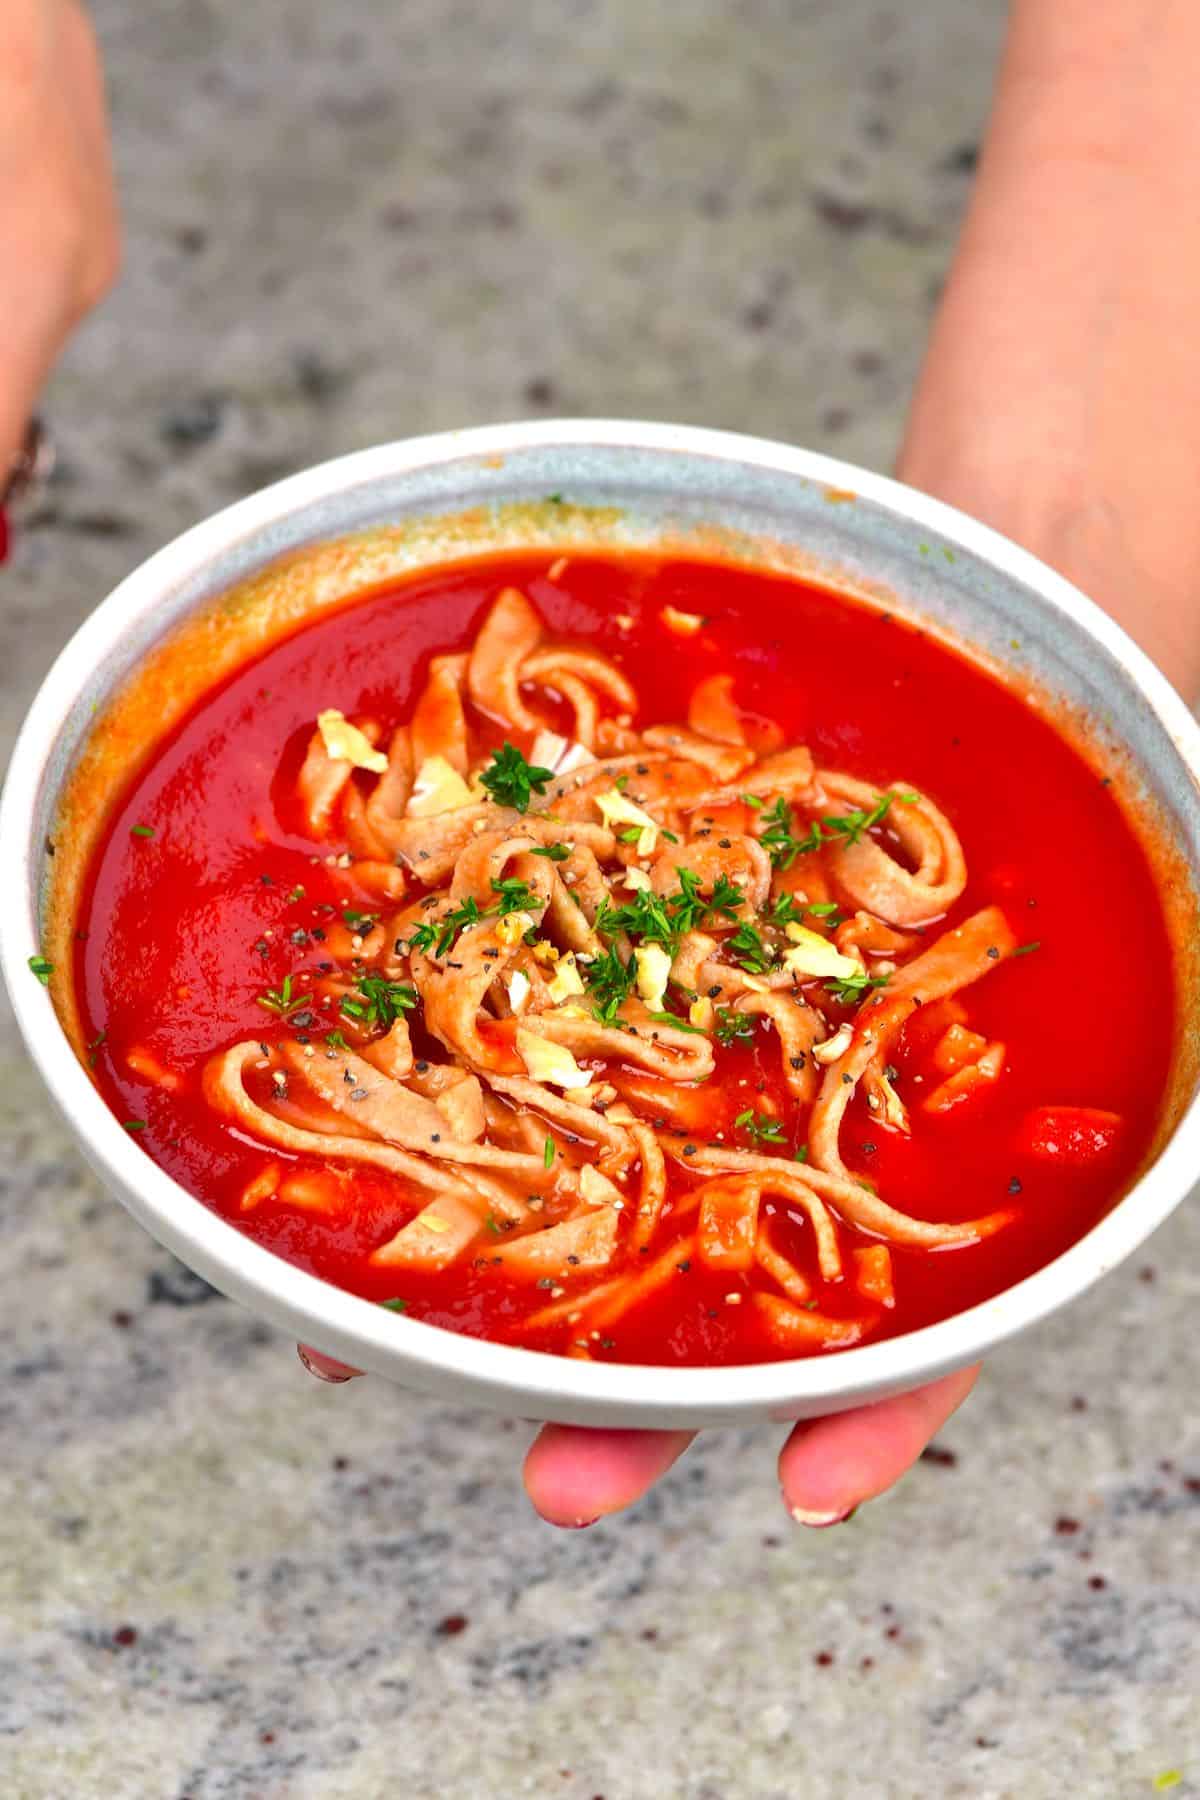 Oat pasta with marinara sauce